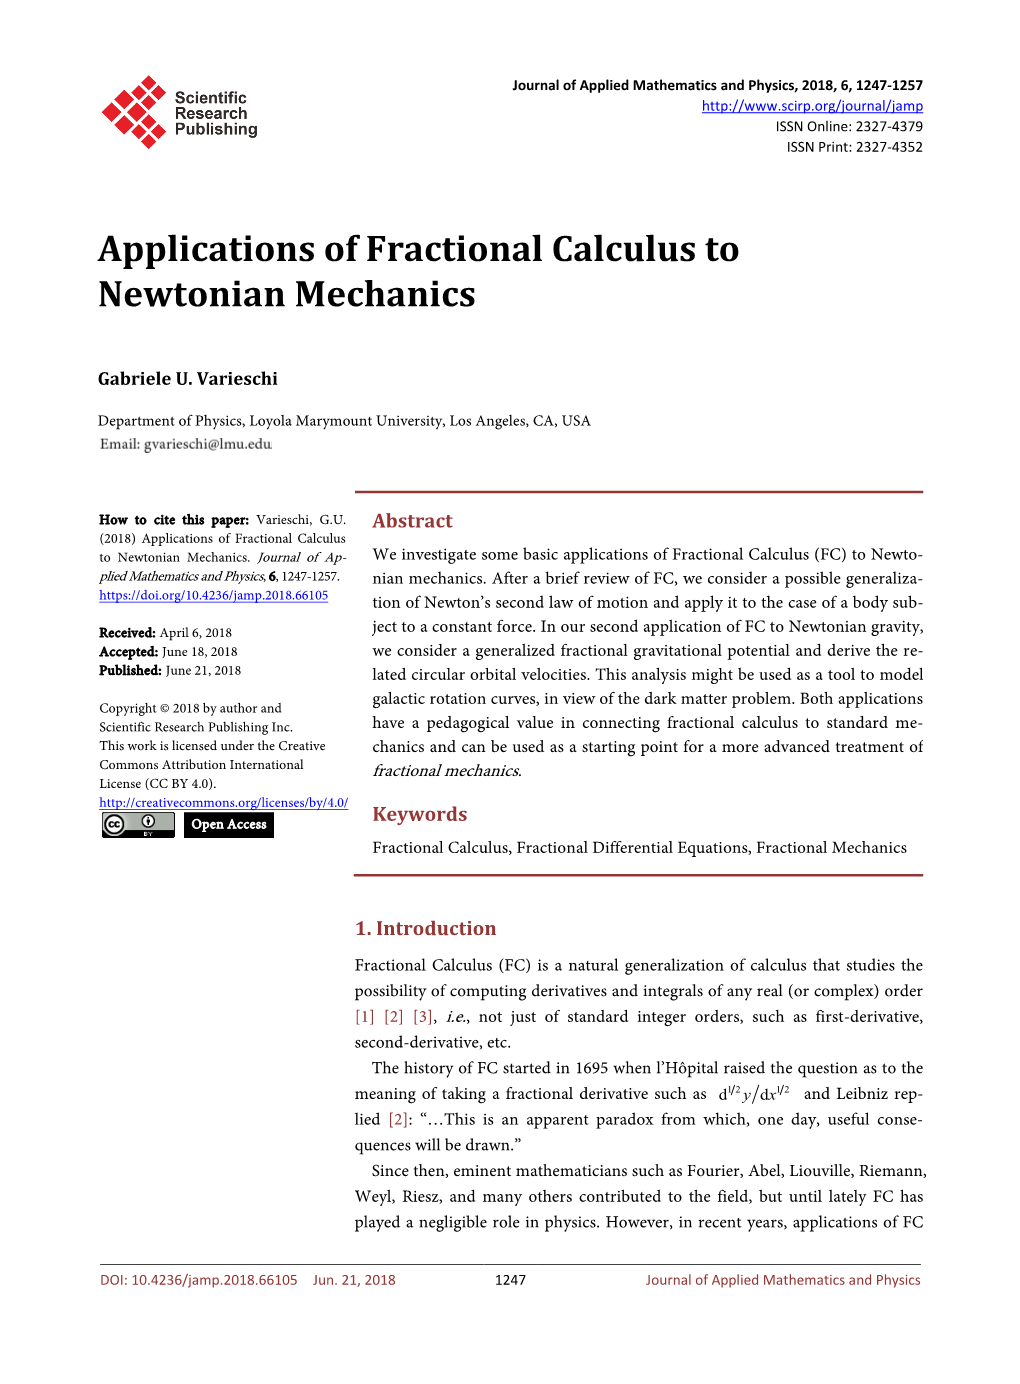 Applications of Fractional Calculus to Newtonian Mechanics